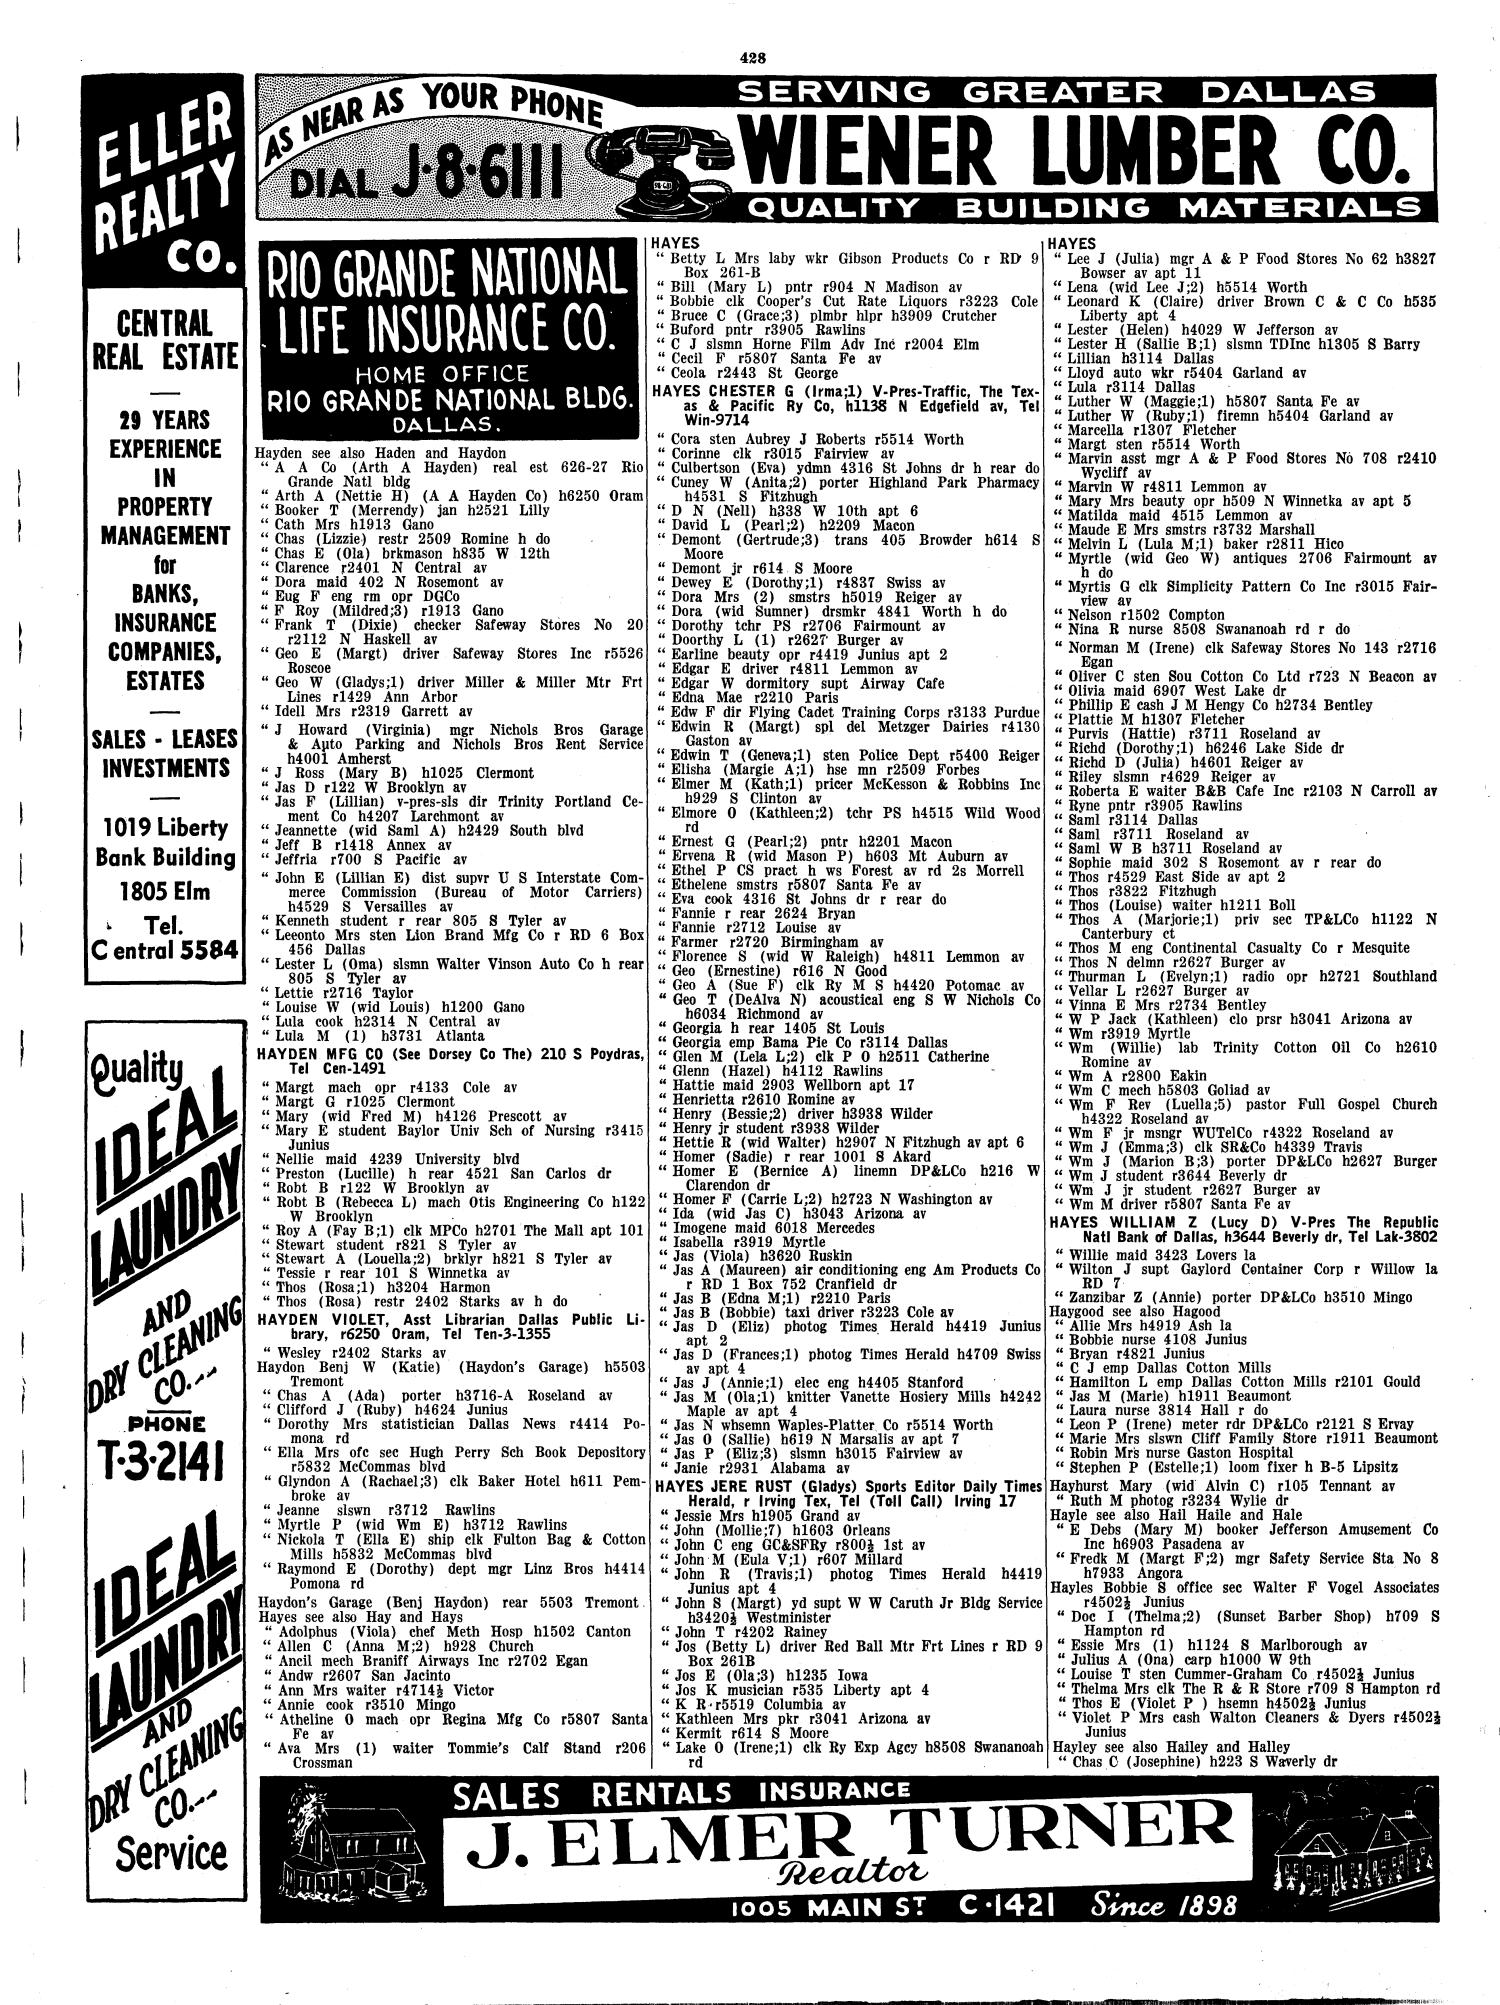 Dallas City Directory, 1941
                                                
                                                    428
                                                